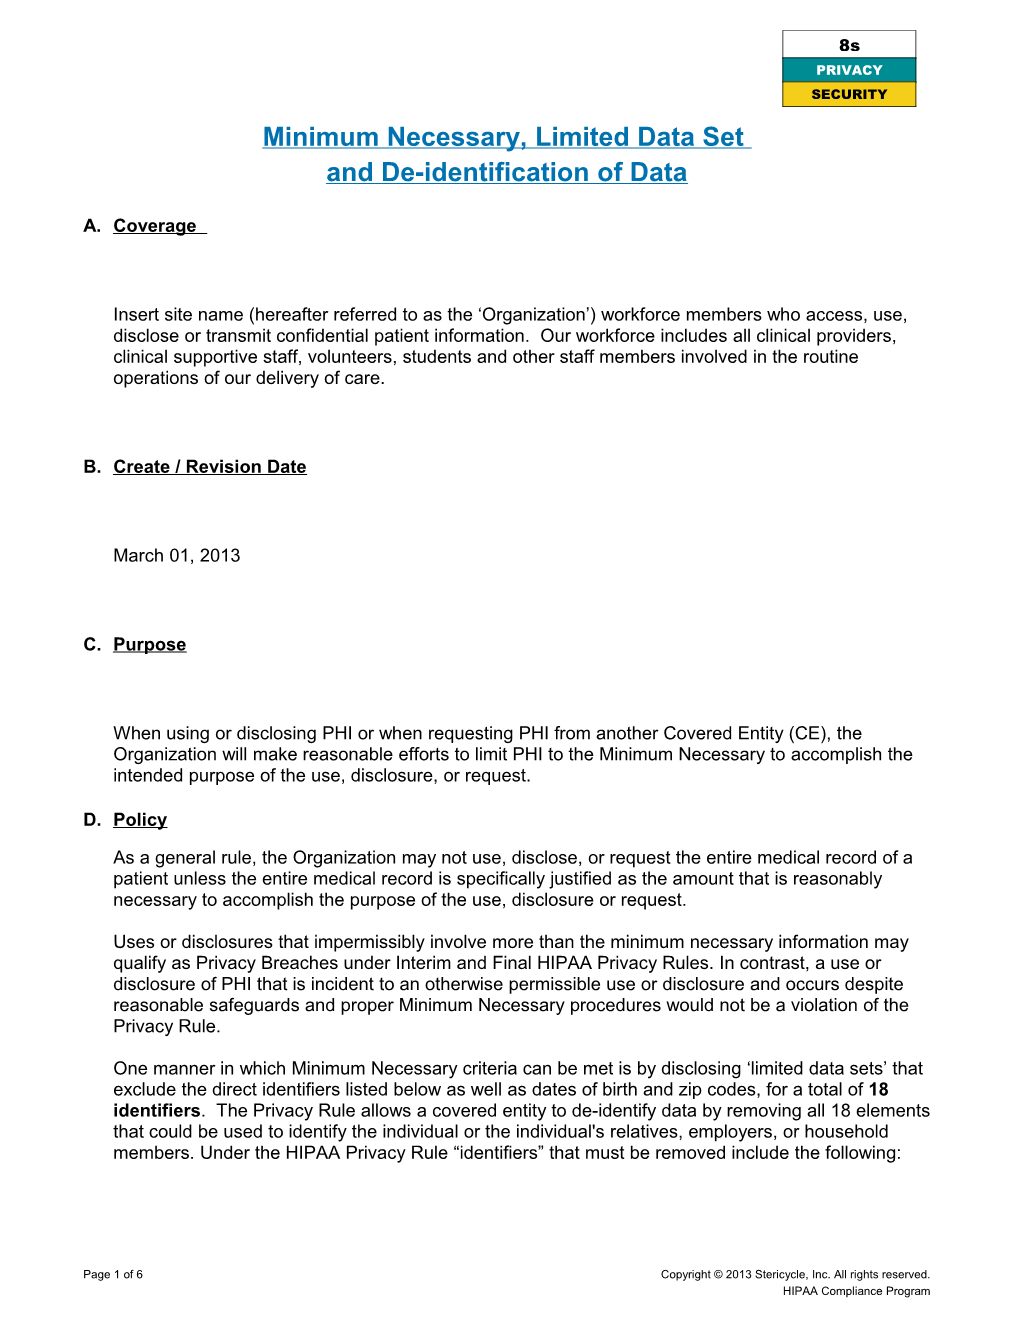 Minimum Necessary, Limited Data Set and De-Identification of Data